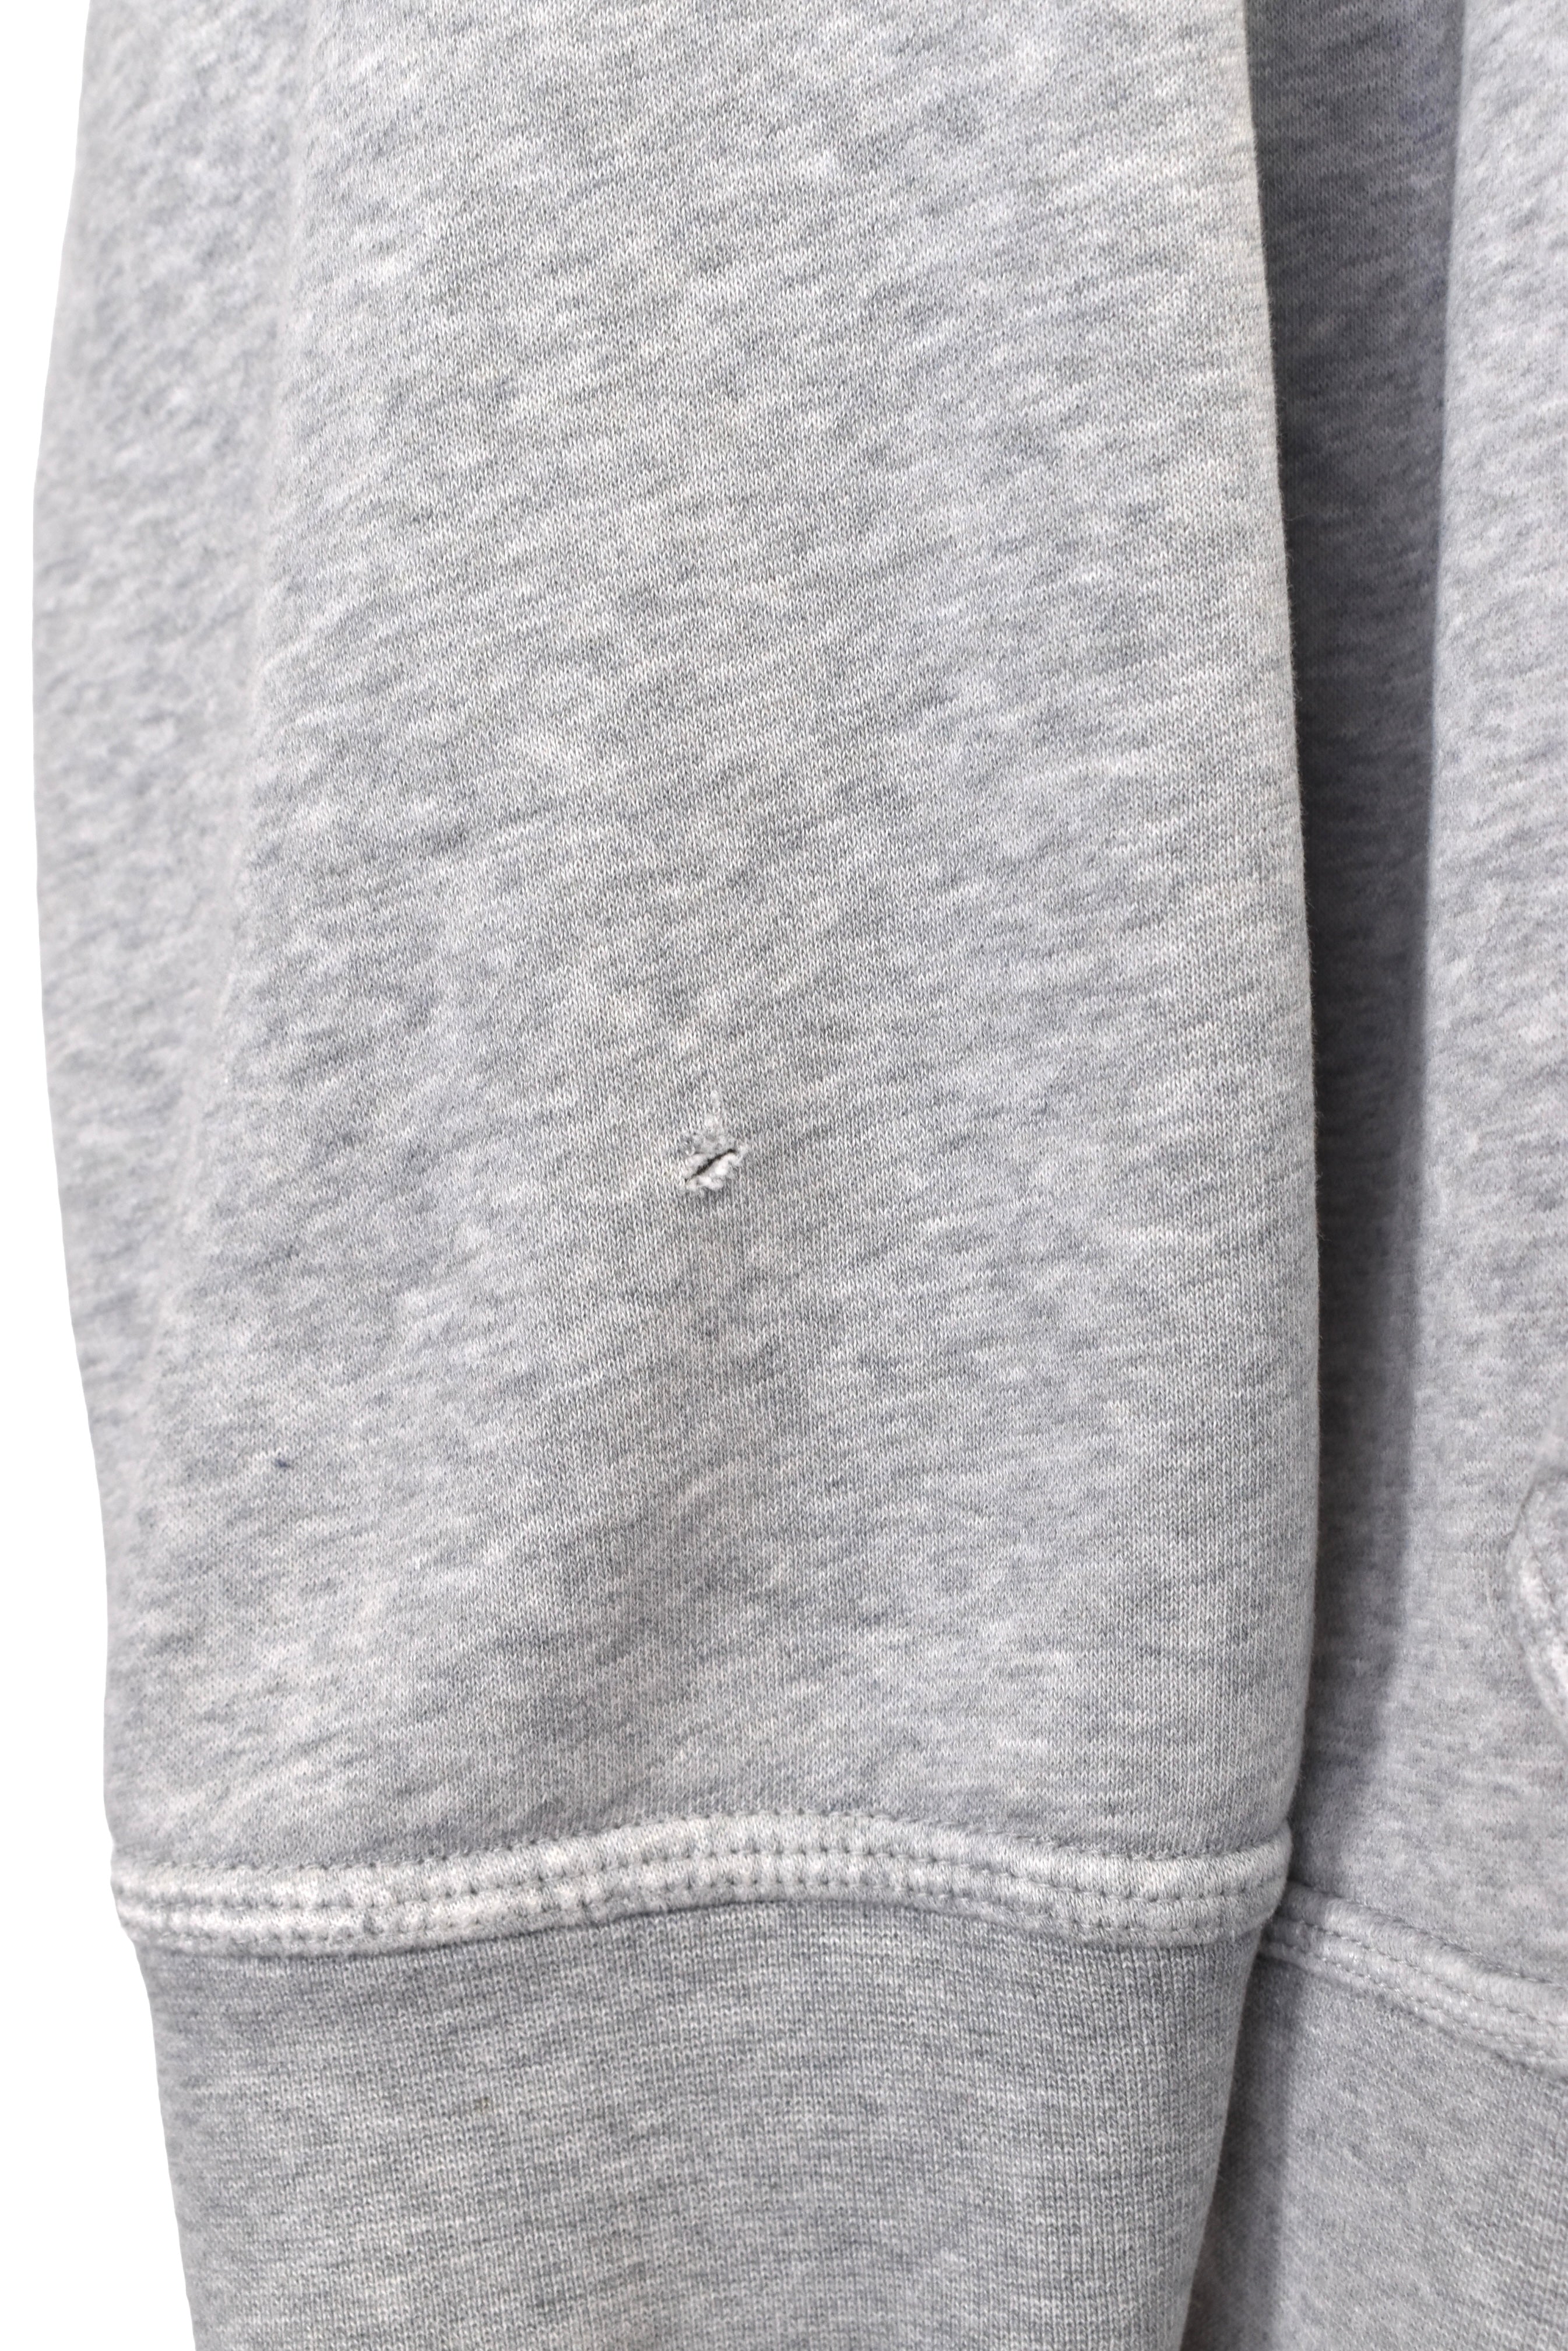 Vintage Nike hoodie, grey centre swoosh embroidered sweatshirt - Large